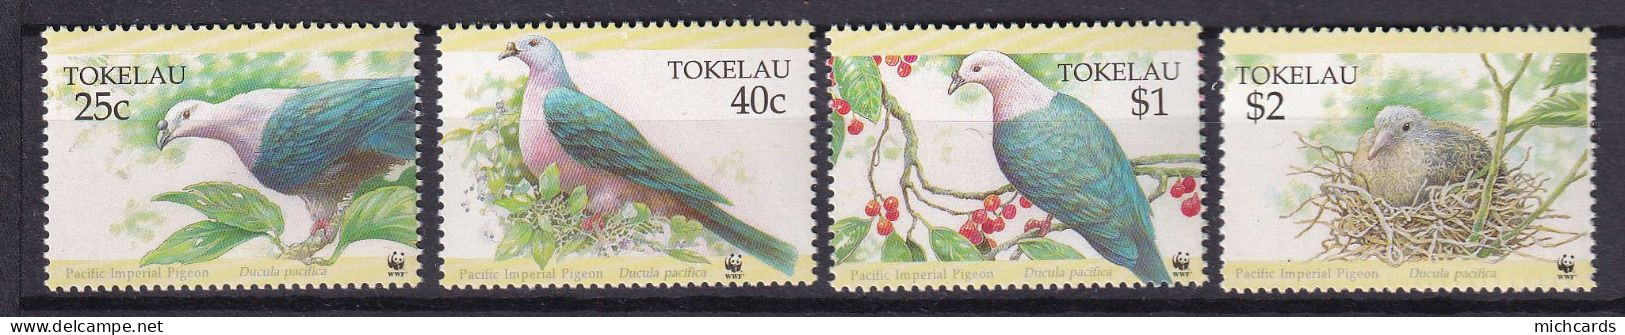 225b TOKELAU 1995 - Yvert 209/12 - WWF Oiseau Pigeon - Neuf ** (MNH) Sans Charniere - Tokelau